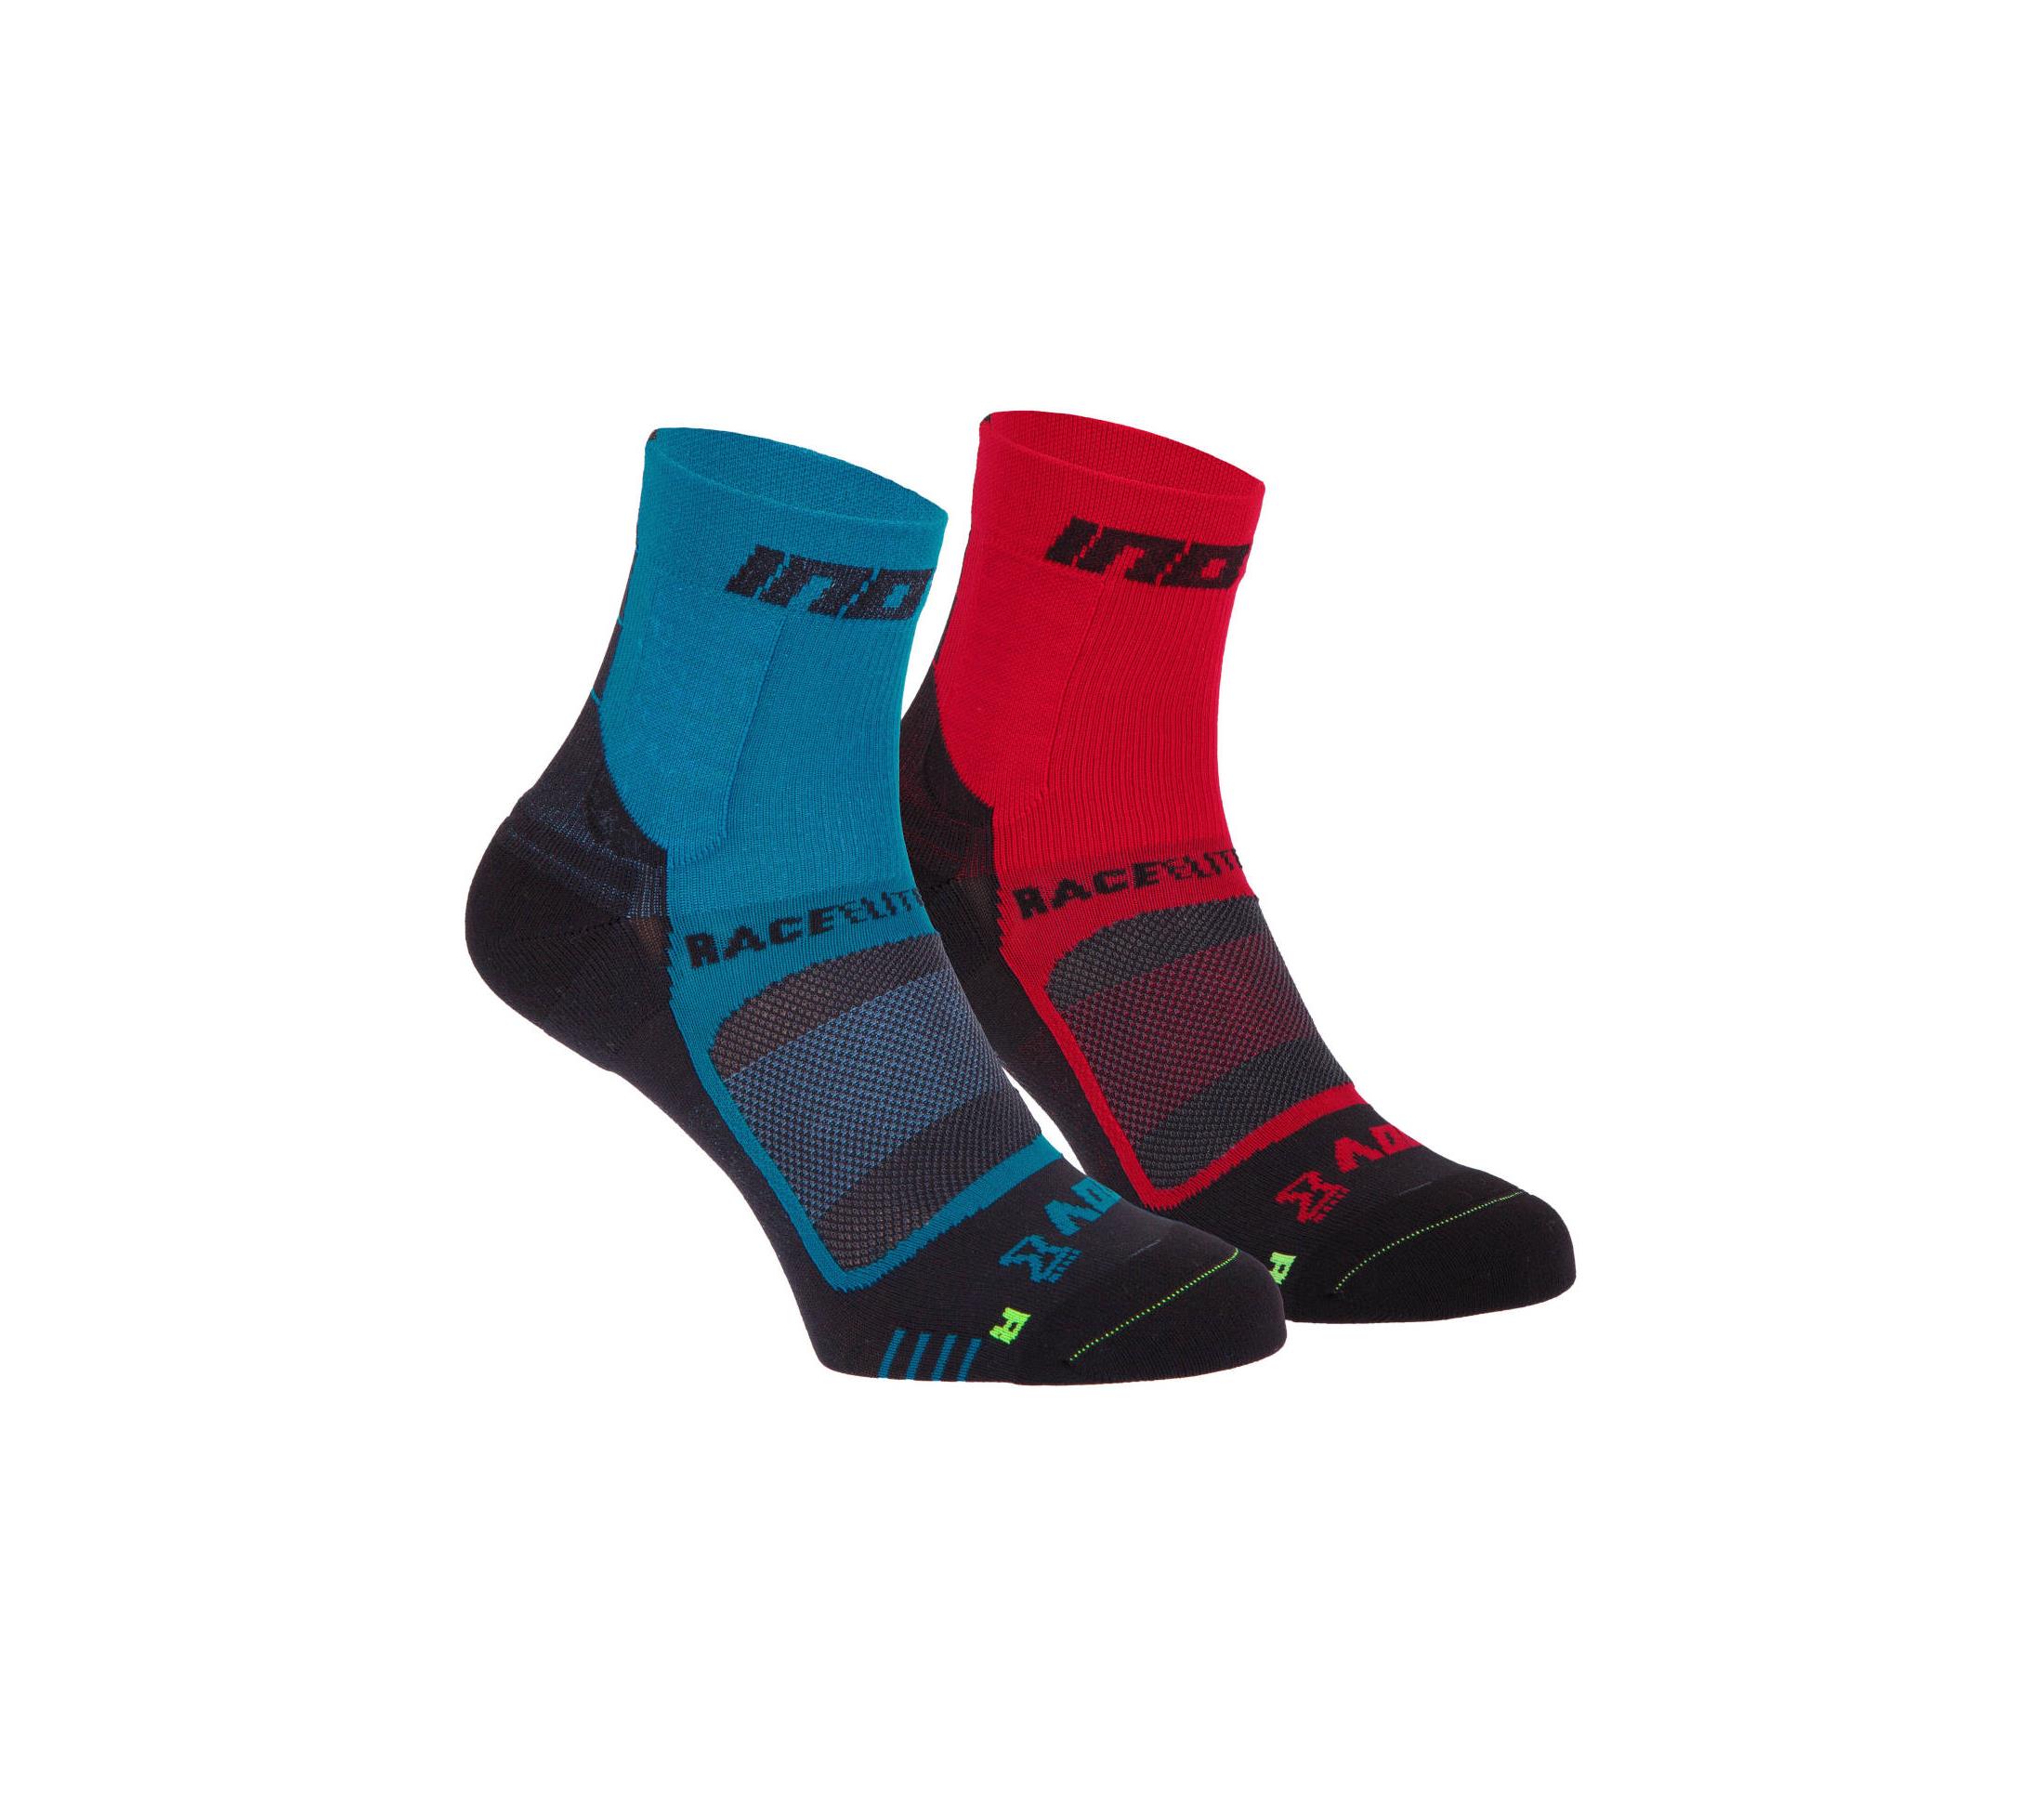 Inov-8 Race Elite Pro Socks OutdoorGB